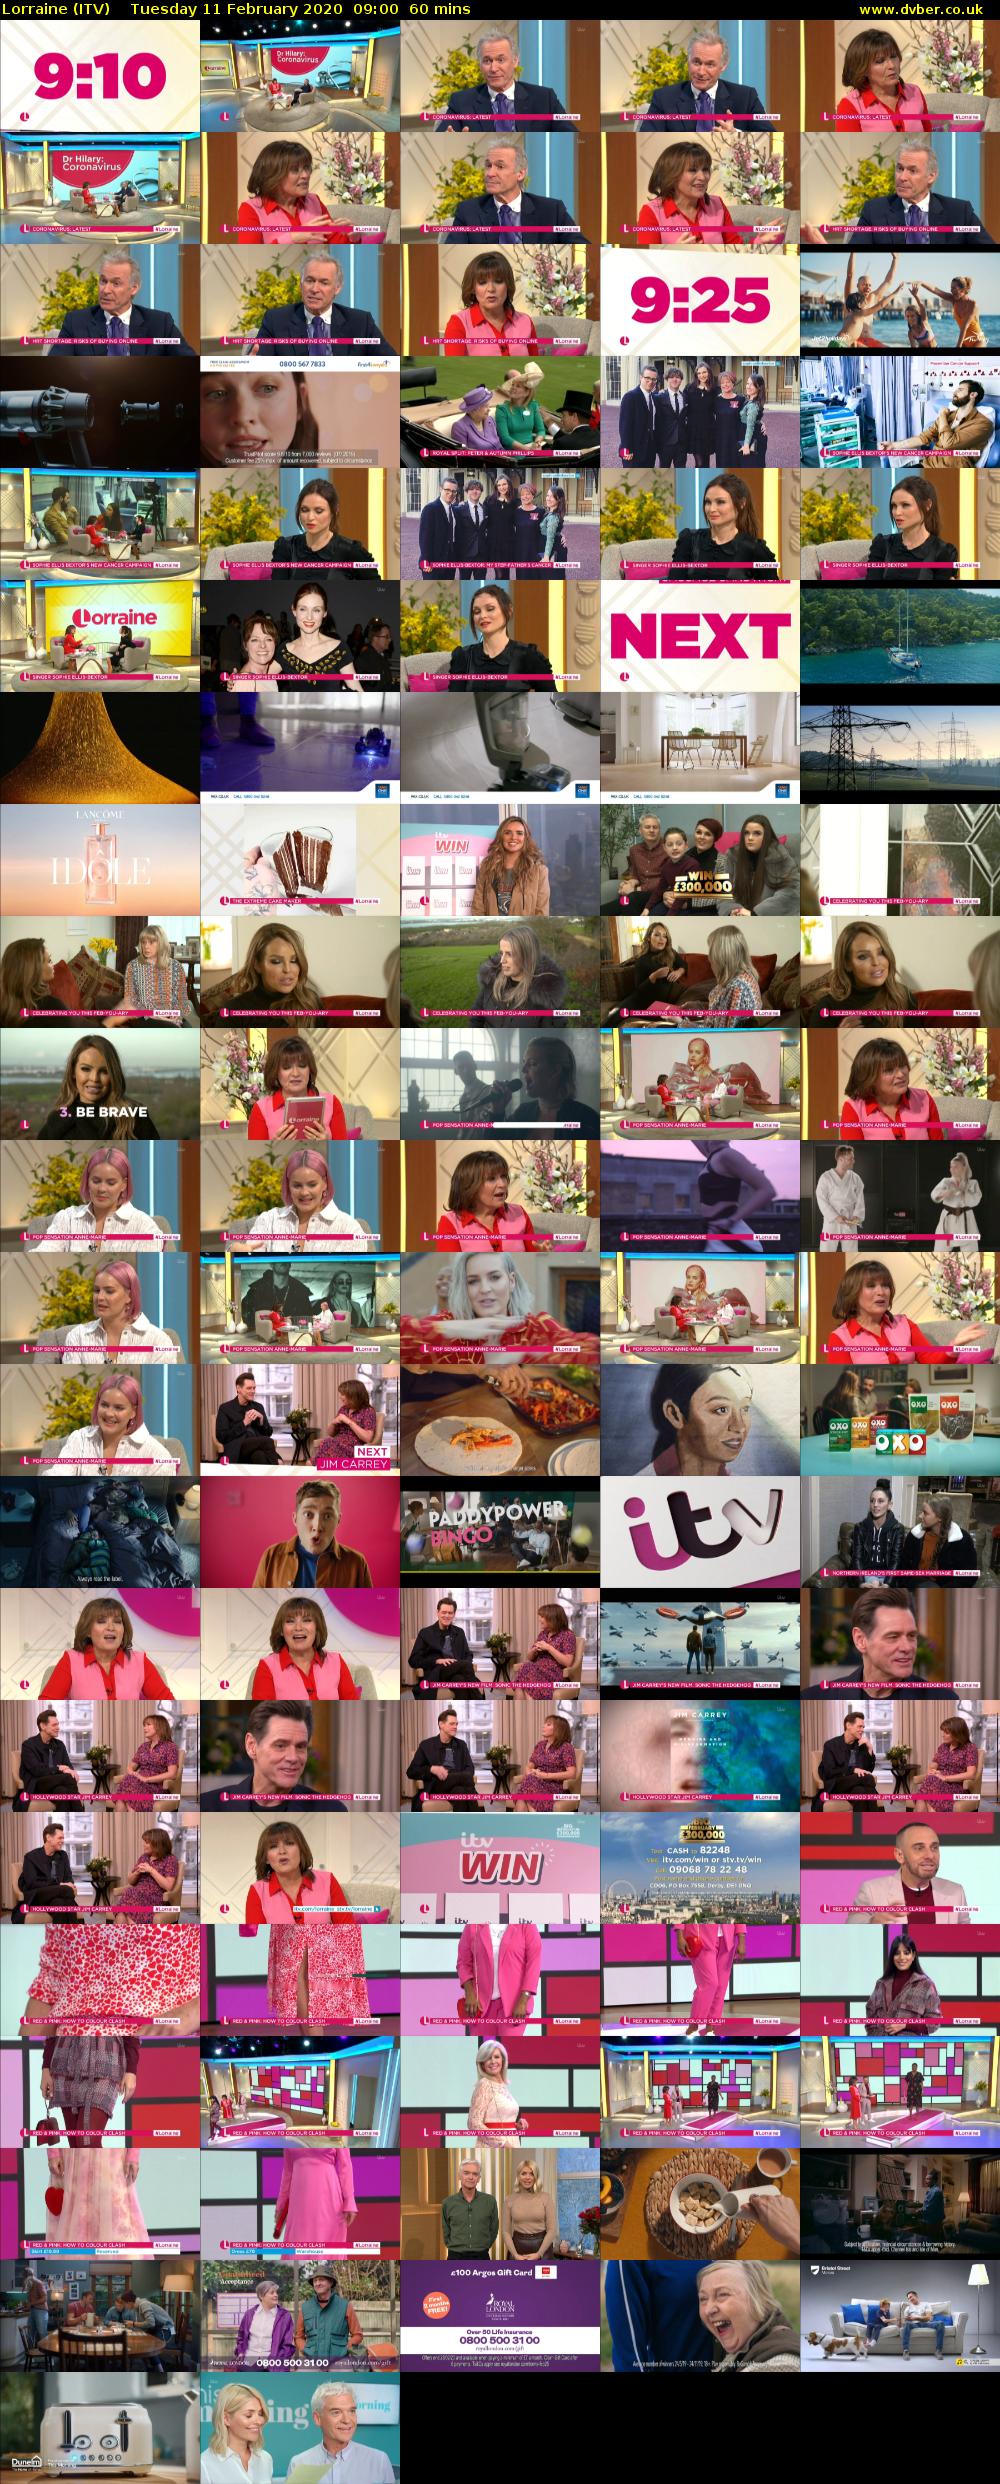 Lorraine (ITV) Tuesday 11 February 2020 09:00 - 10:00